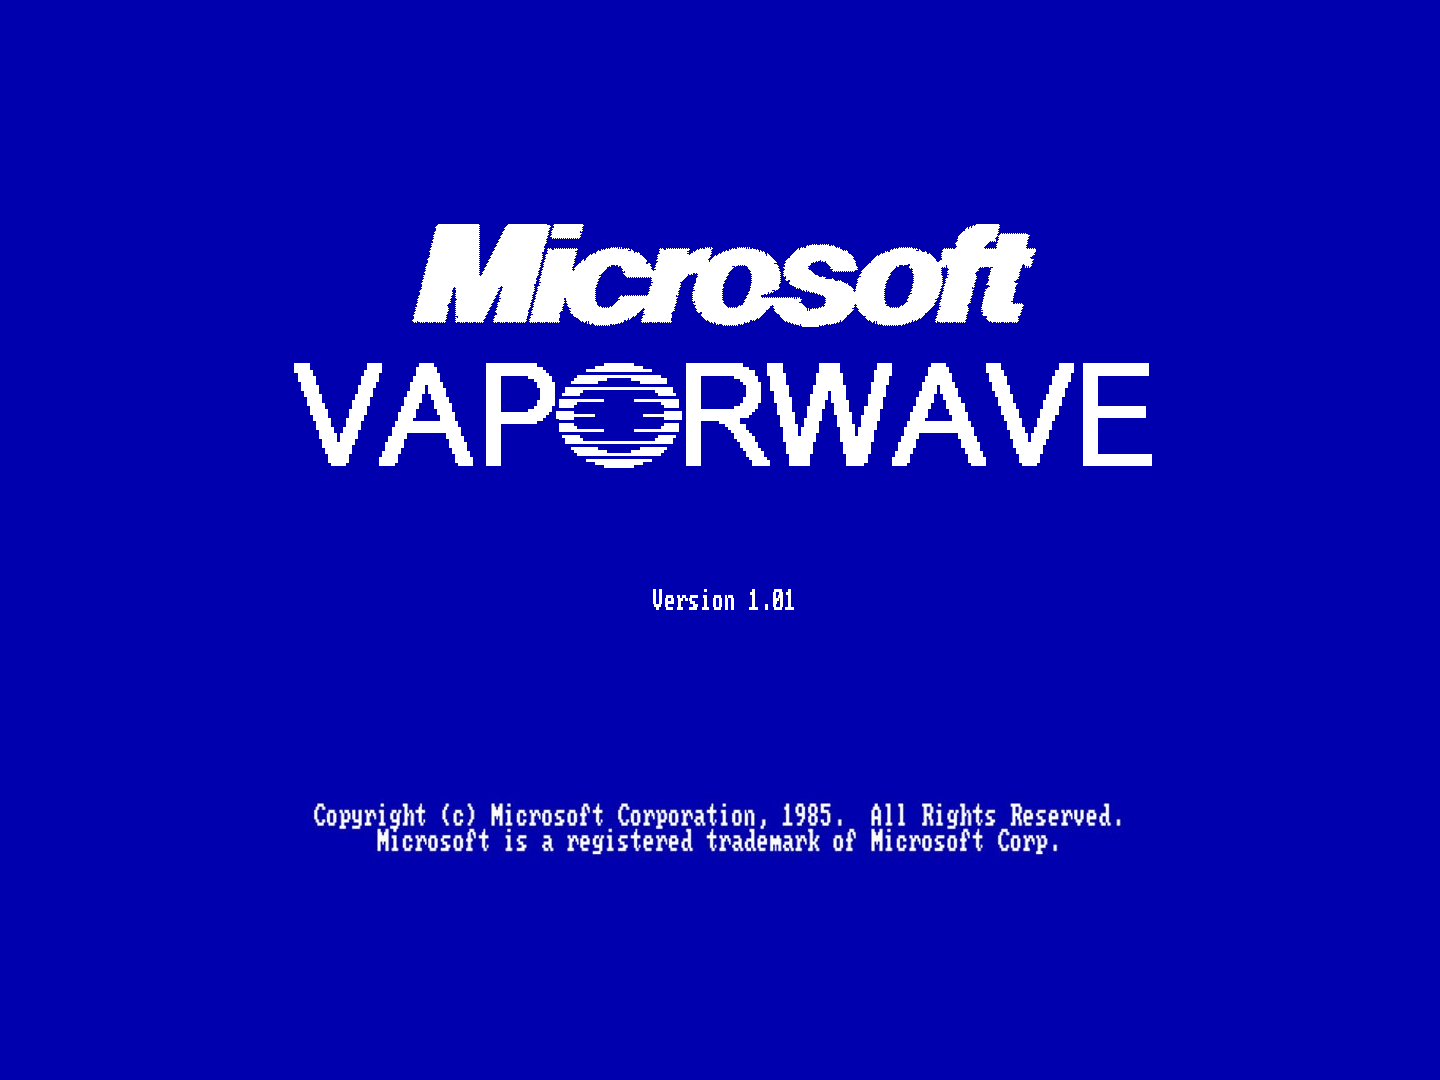 General 1440x1080 simple background Microsoft blue vaporwave